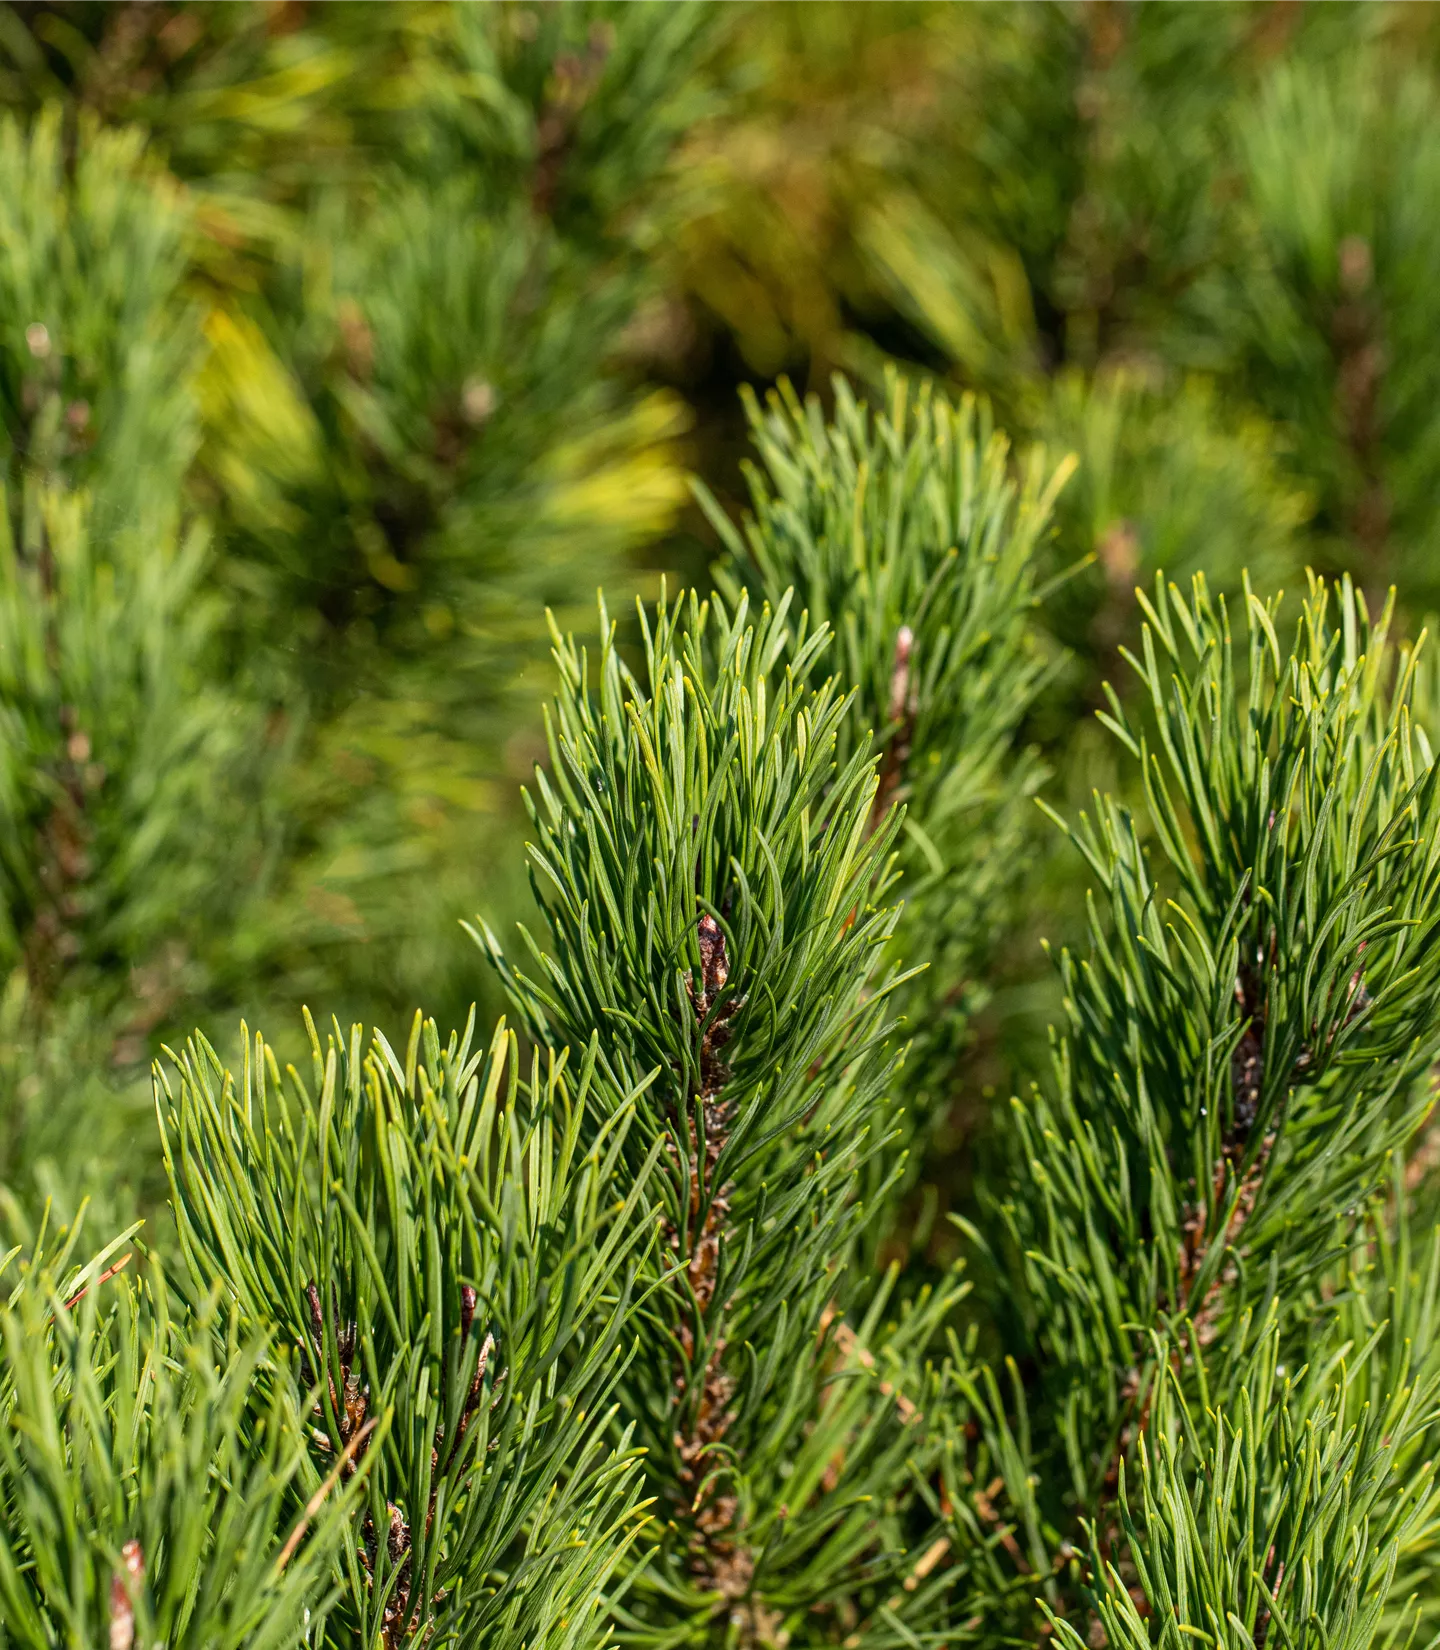 Pinus mugo 'Winter Gold'